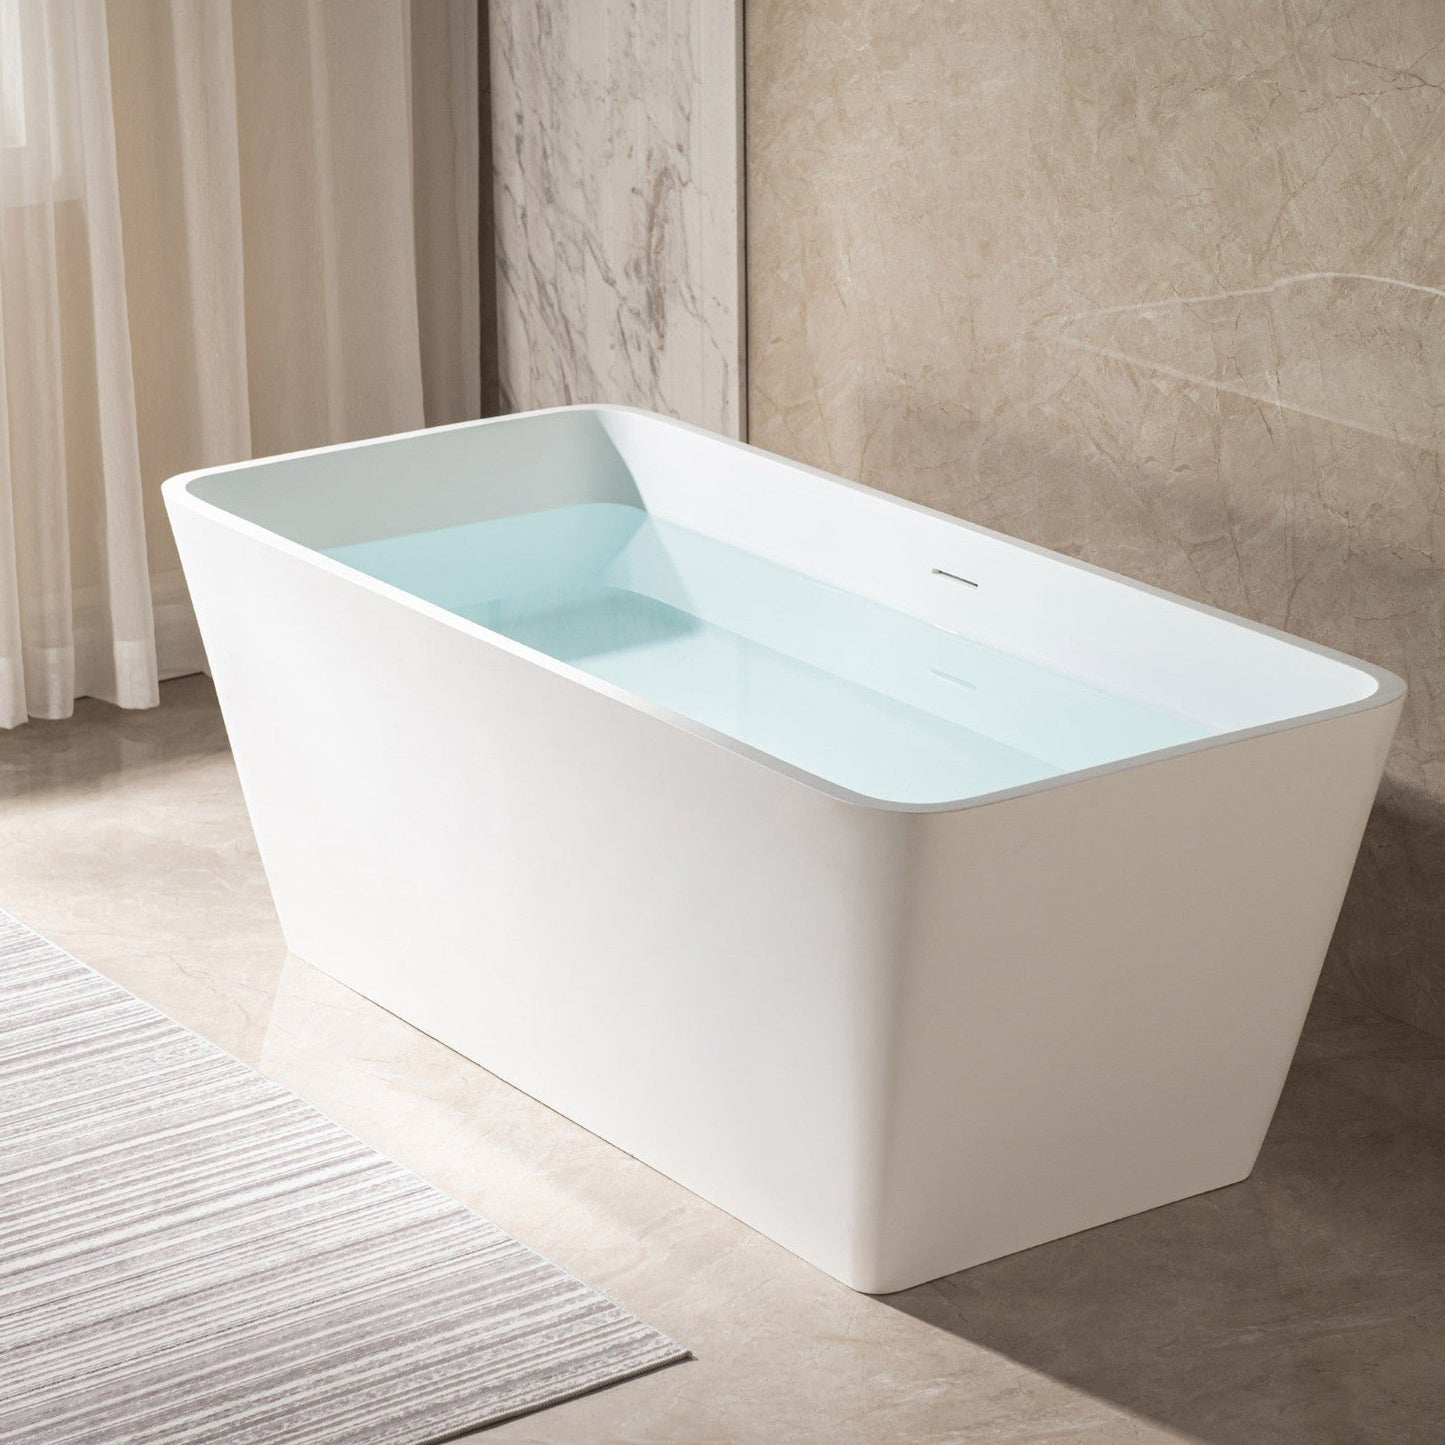 WoodBridge B0046 59" Matte White Luxury Contemporary Solid Surface Freestanding Bathtub